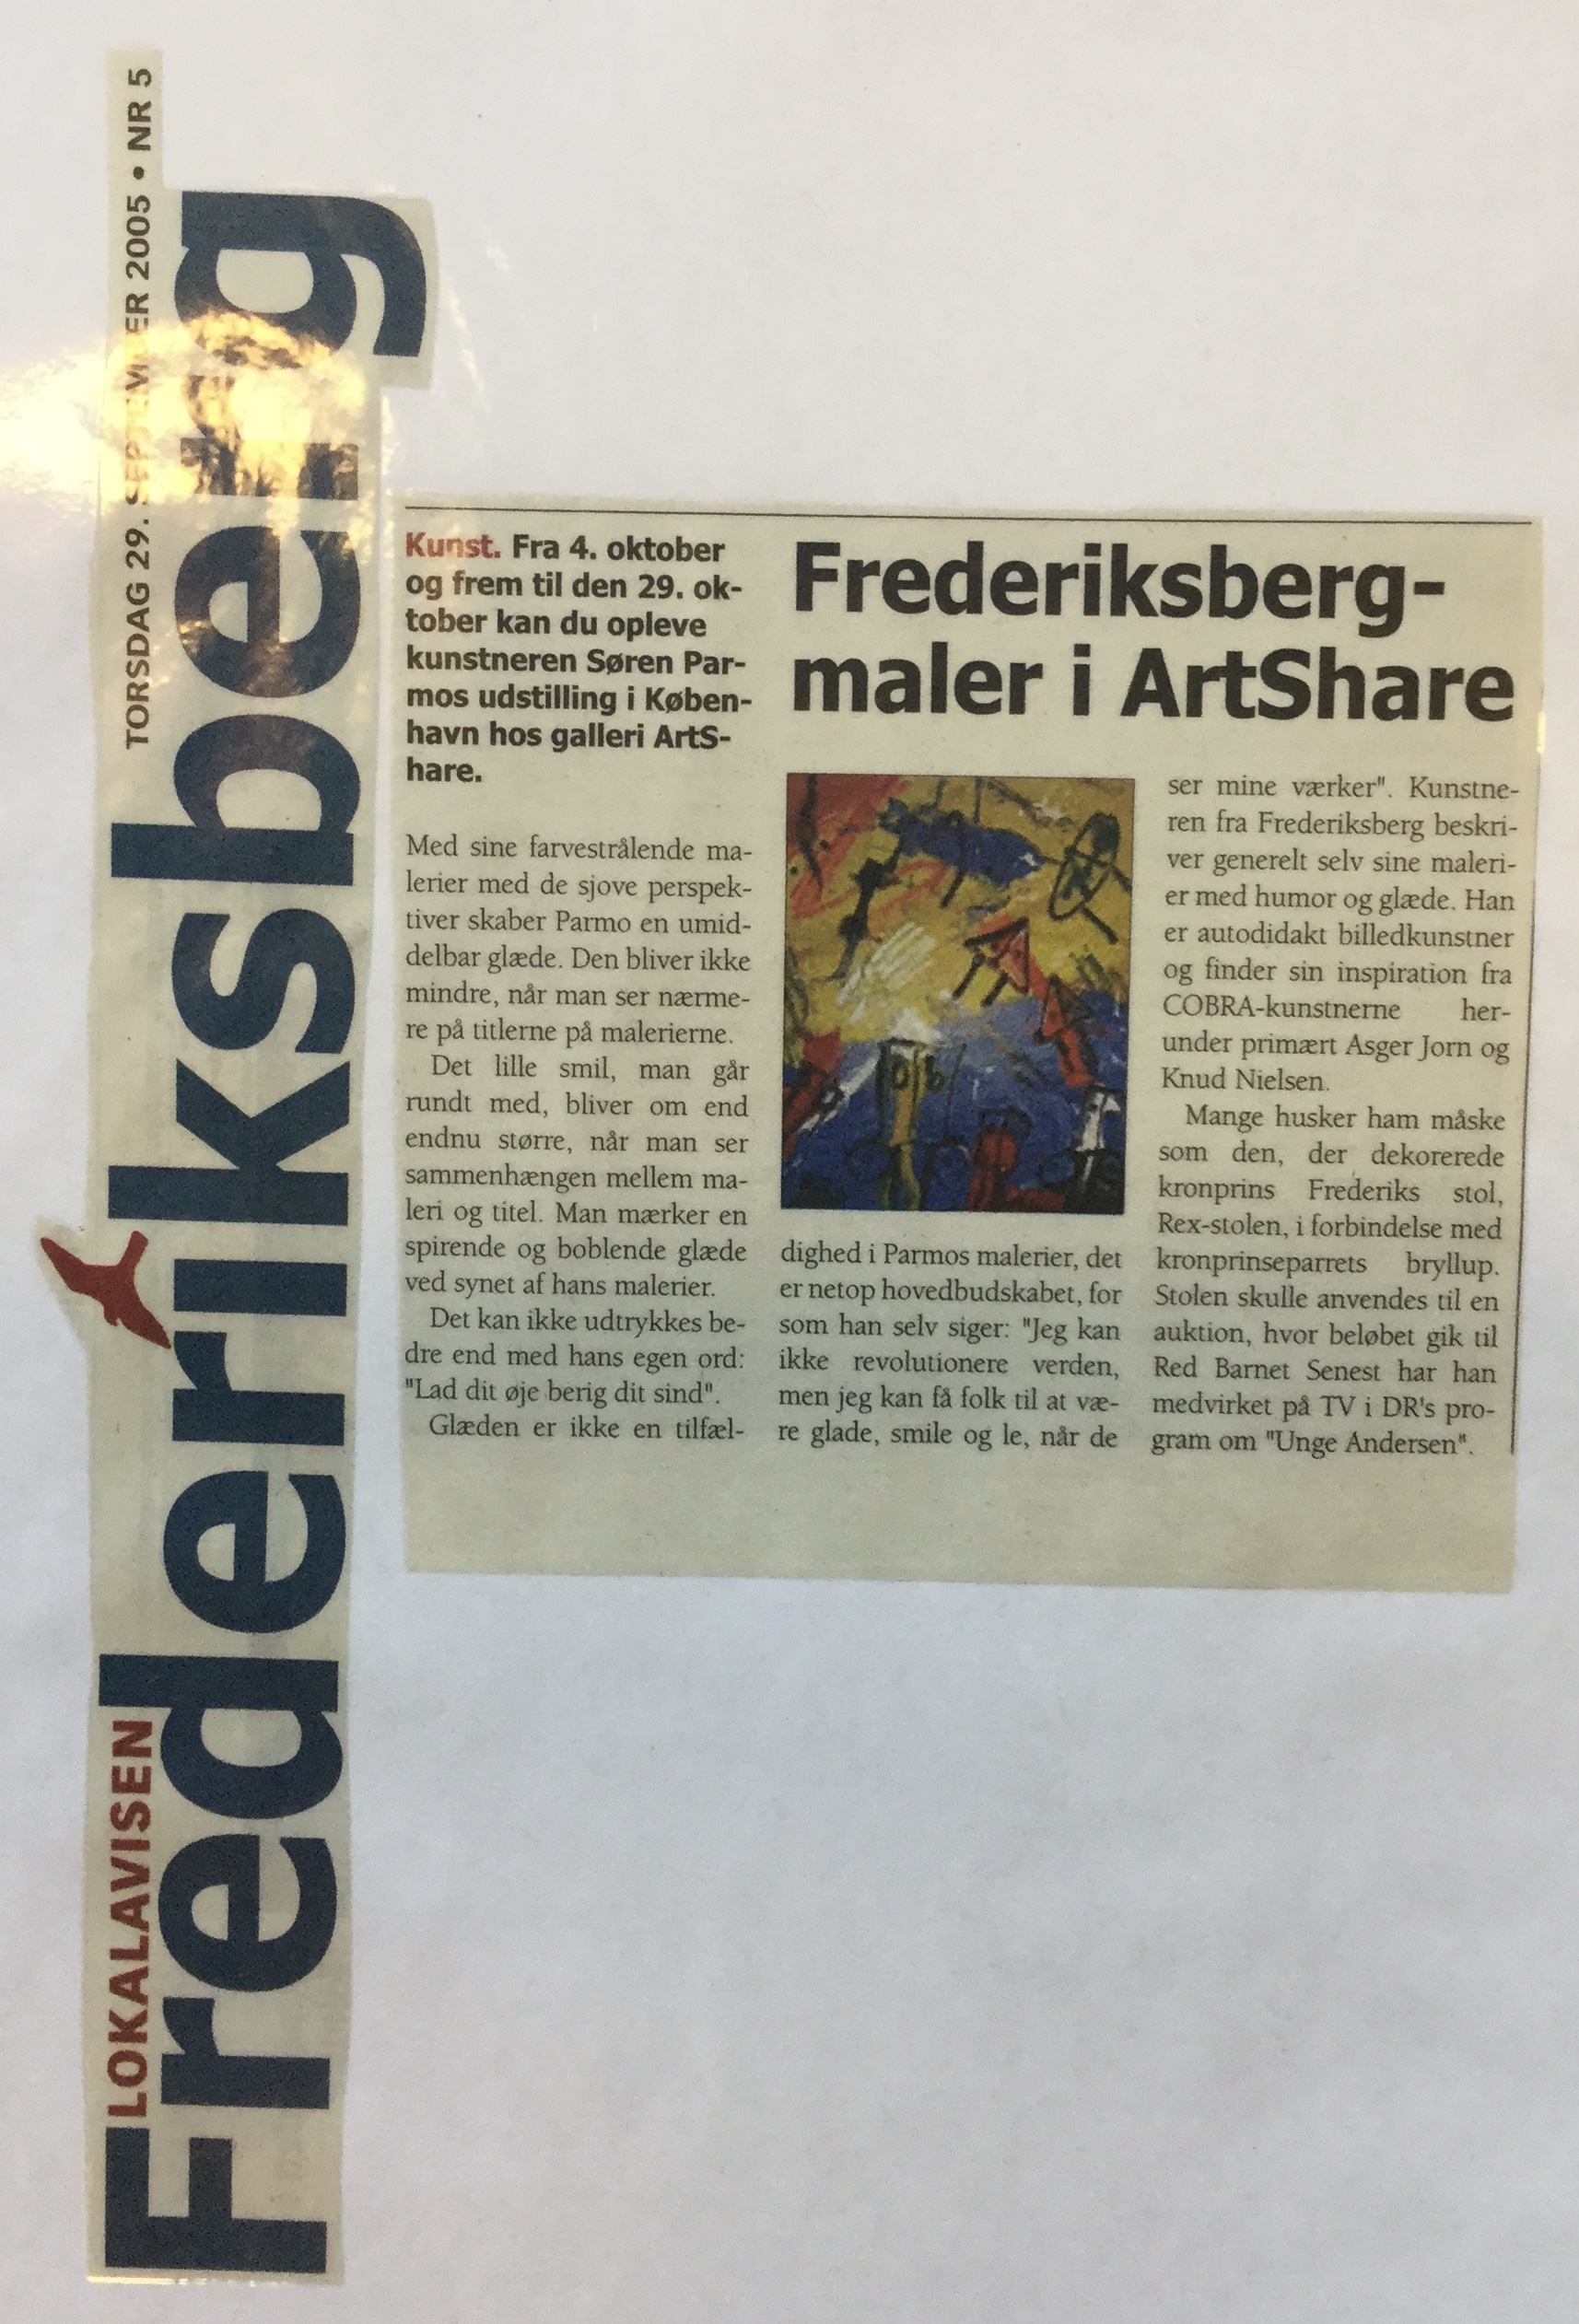 Frederiksberg-maler i Artshare